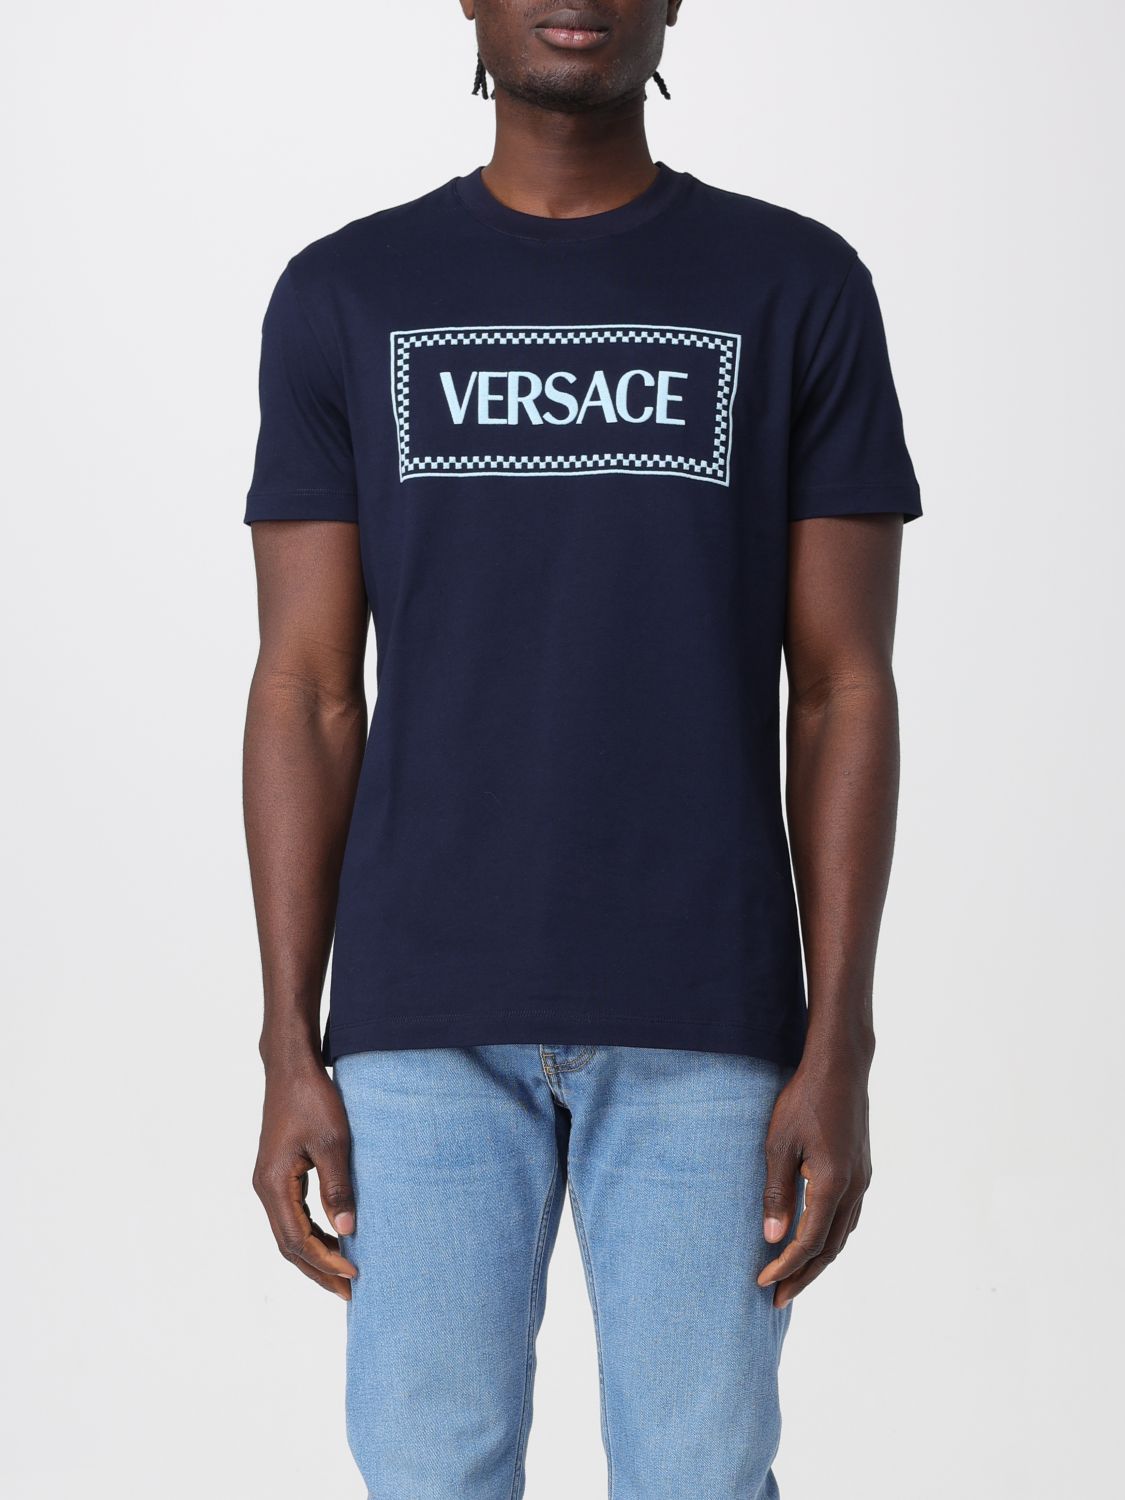 Versace T-Shirt VERSACE Men colour Navy